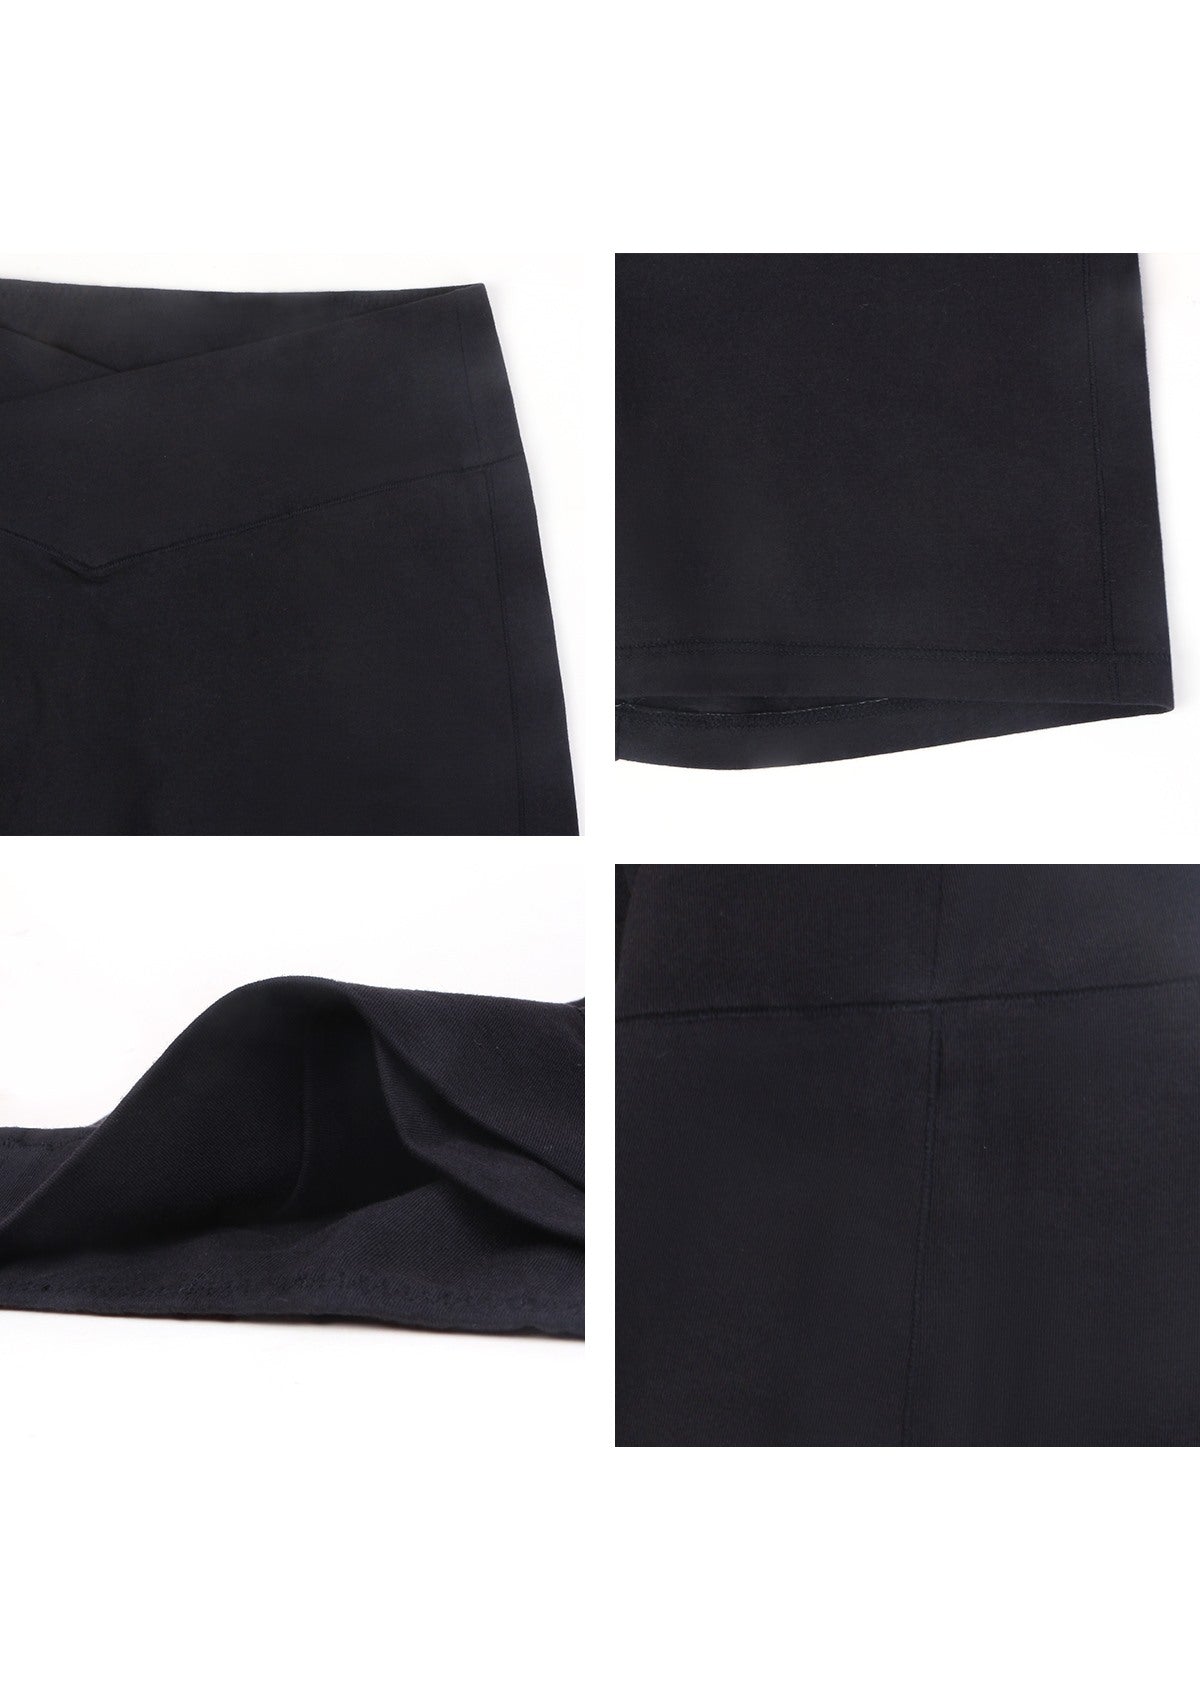 All-Day Comfort High-Rise Cotton Boyshorts Underwear 3 Pack - L / Black+Beige+Green